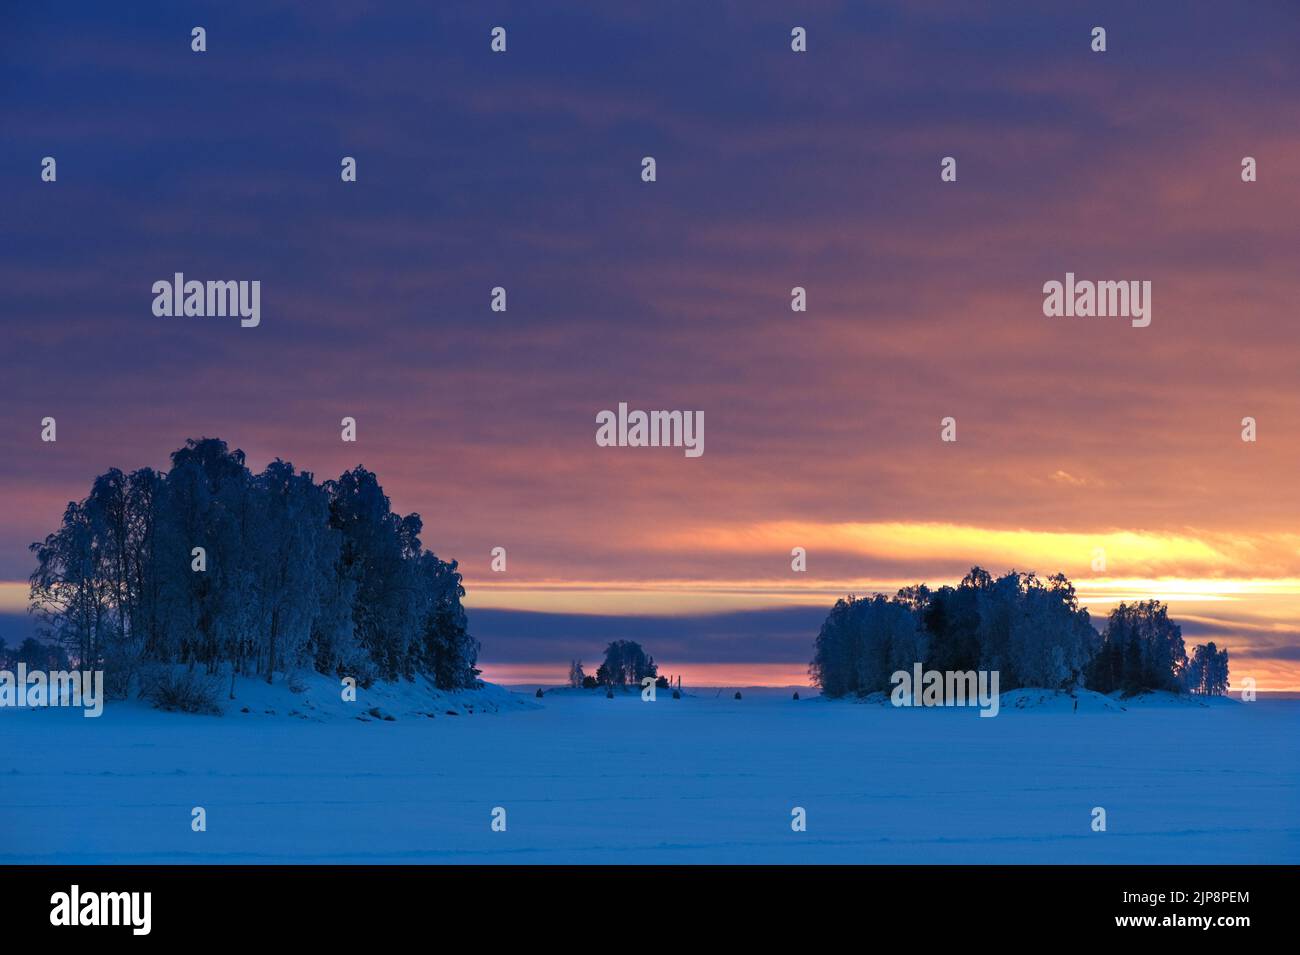 Frozen lake and islands, winter landscape. Sunset sky. Stock Photo